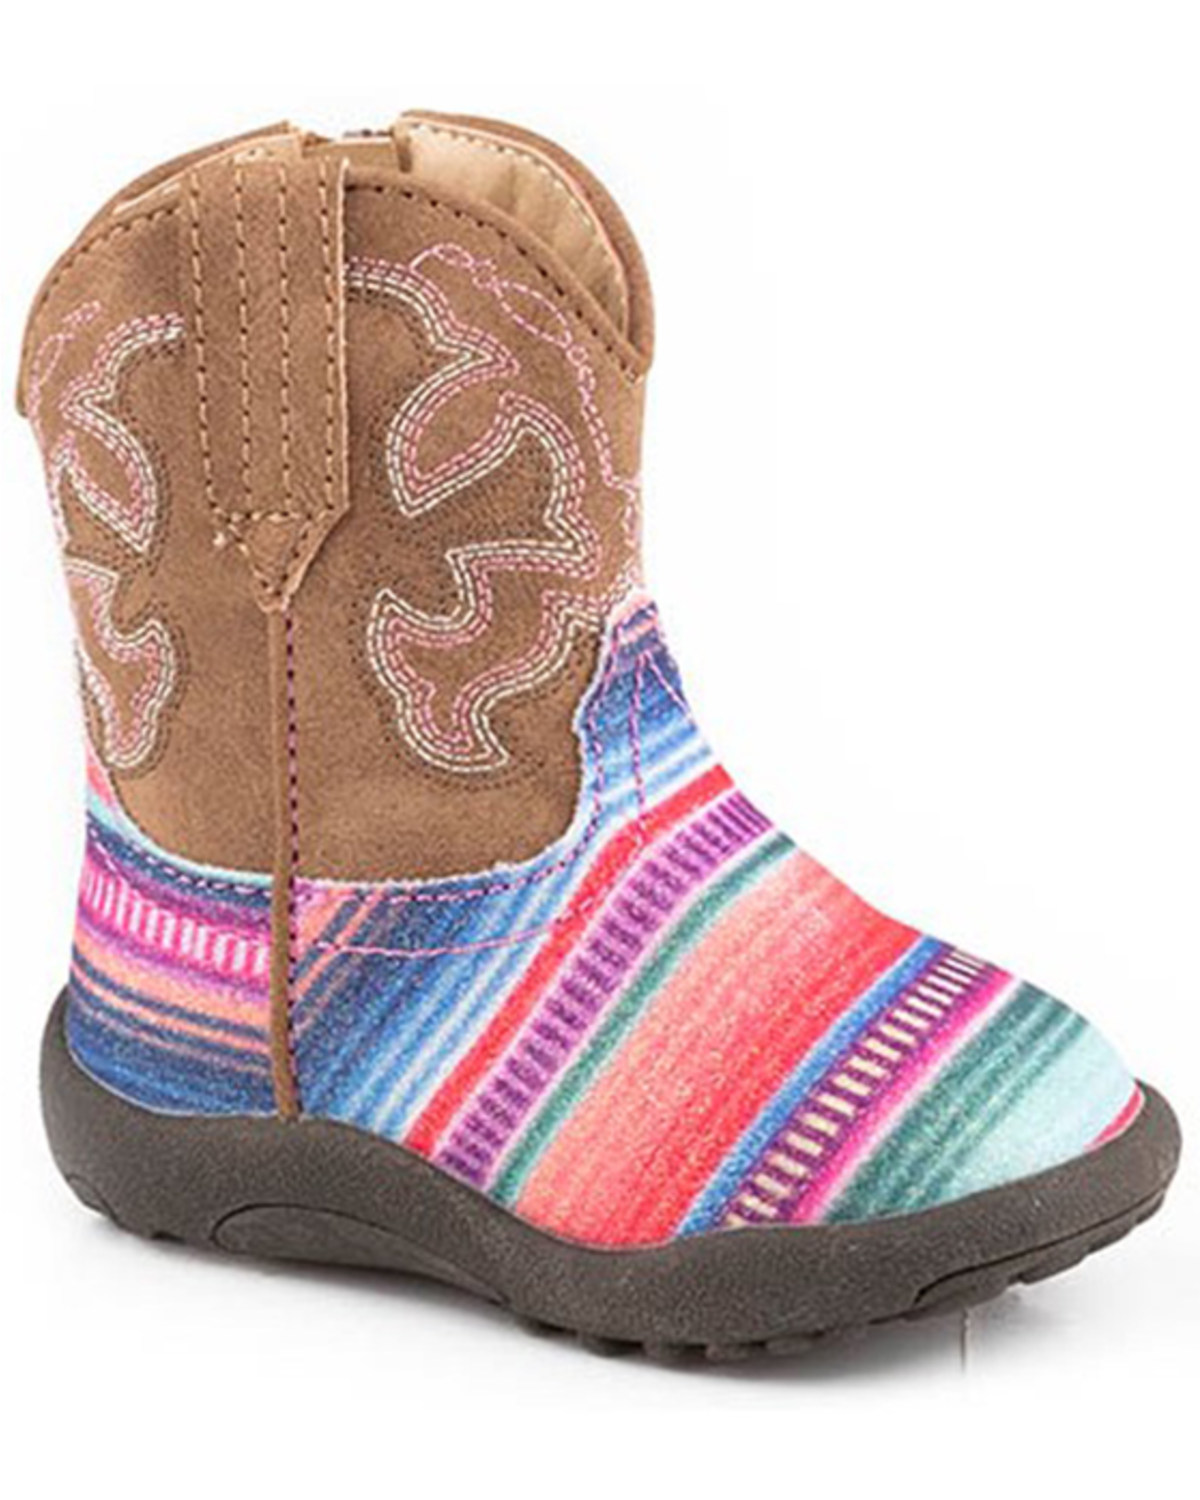 Roper Infant Girls' Glitter Serape Western Boots - Round Toe